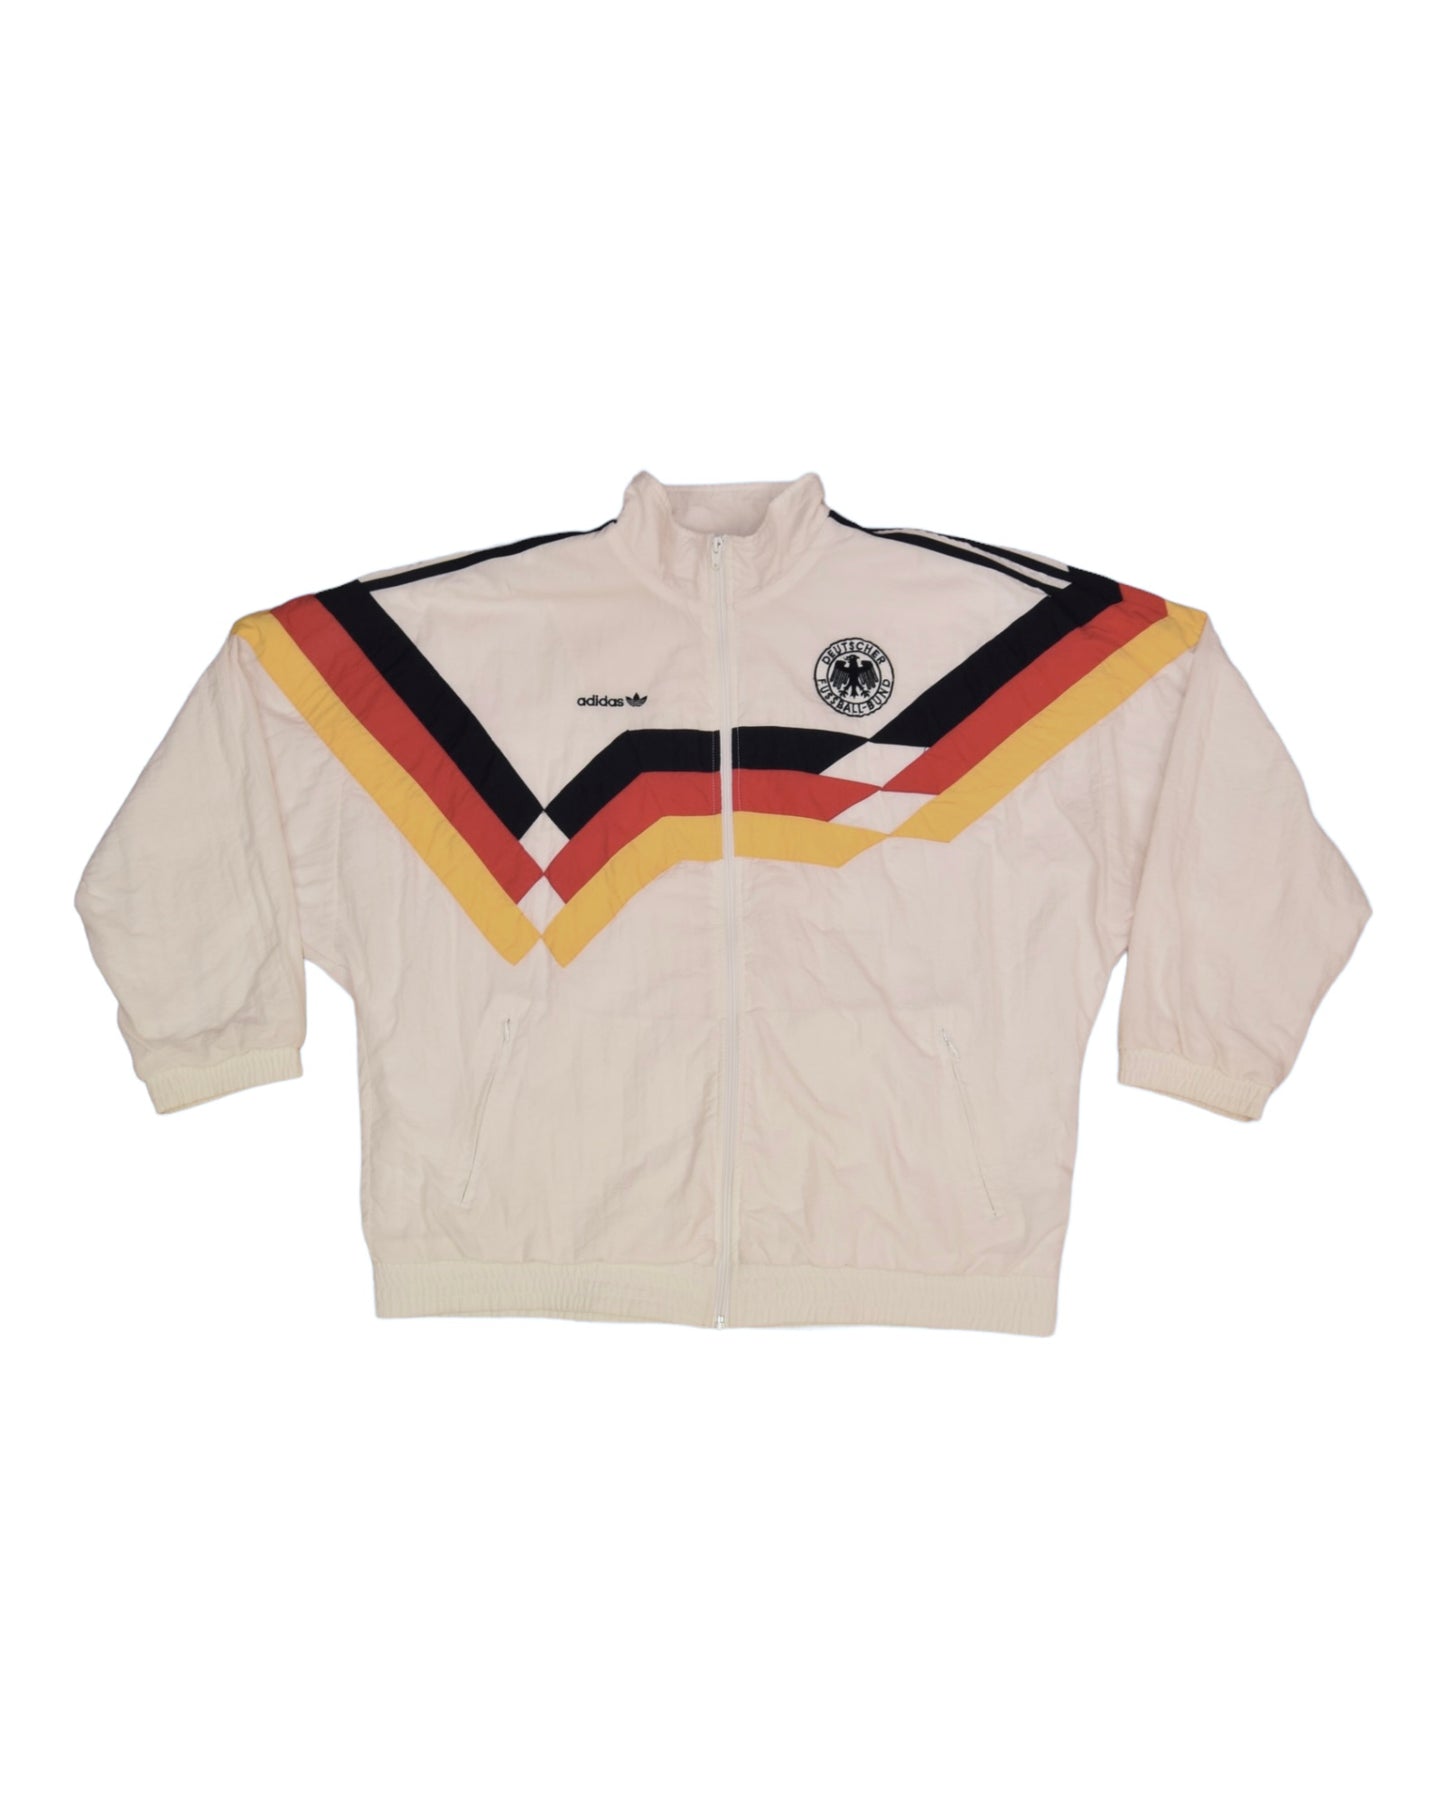 Vintage Germany Deutschland Adidas 1989-1991 Jacket Size L White Yellow Red Black